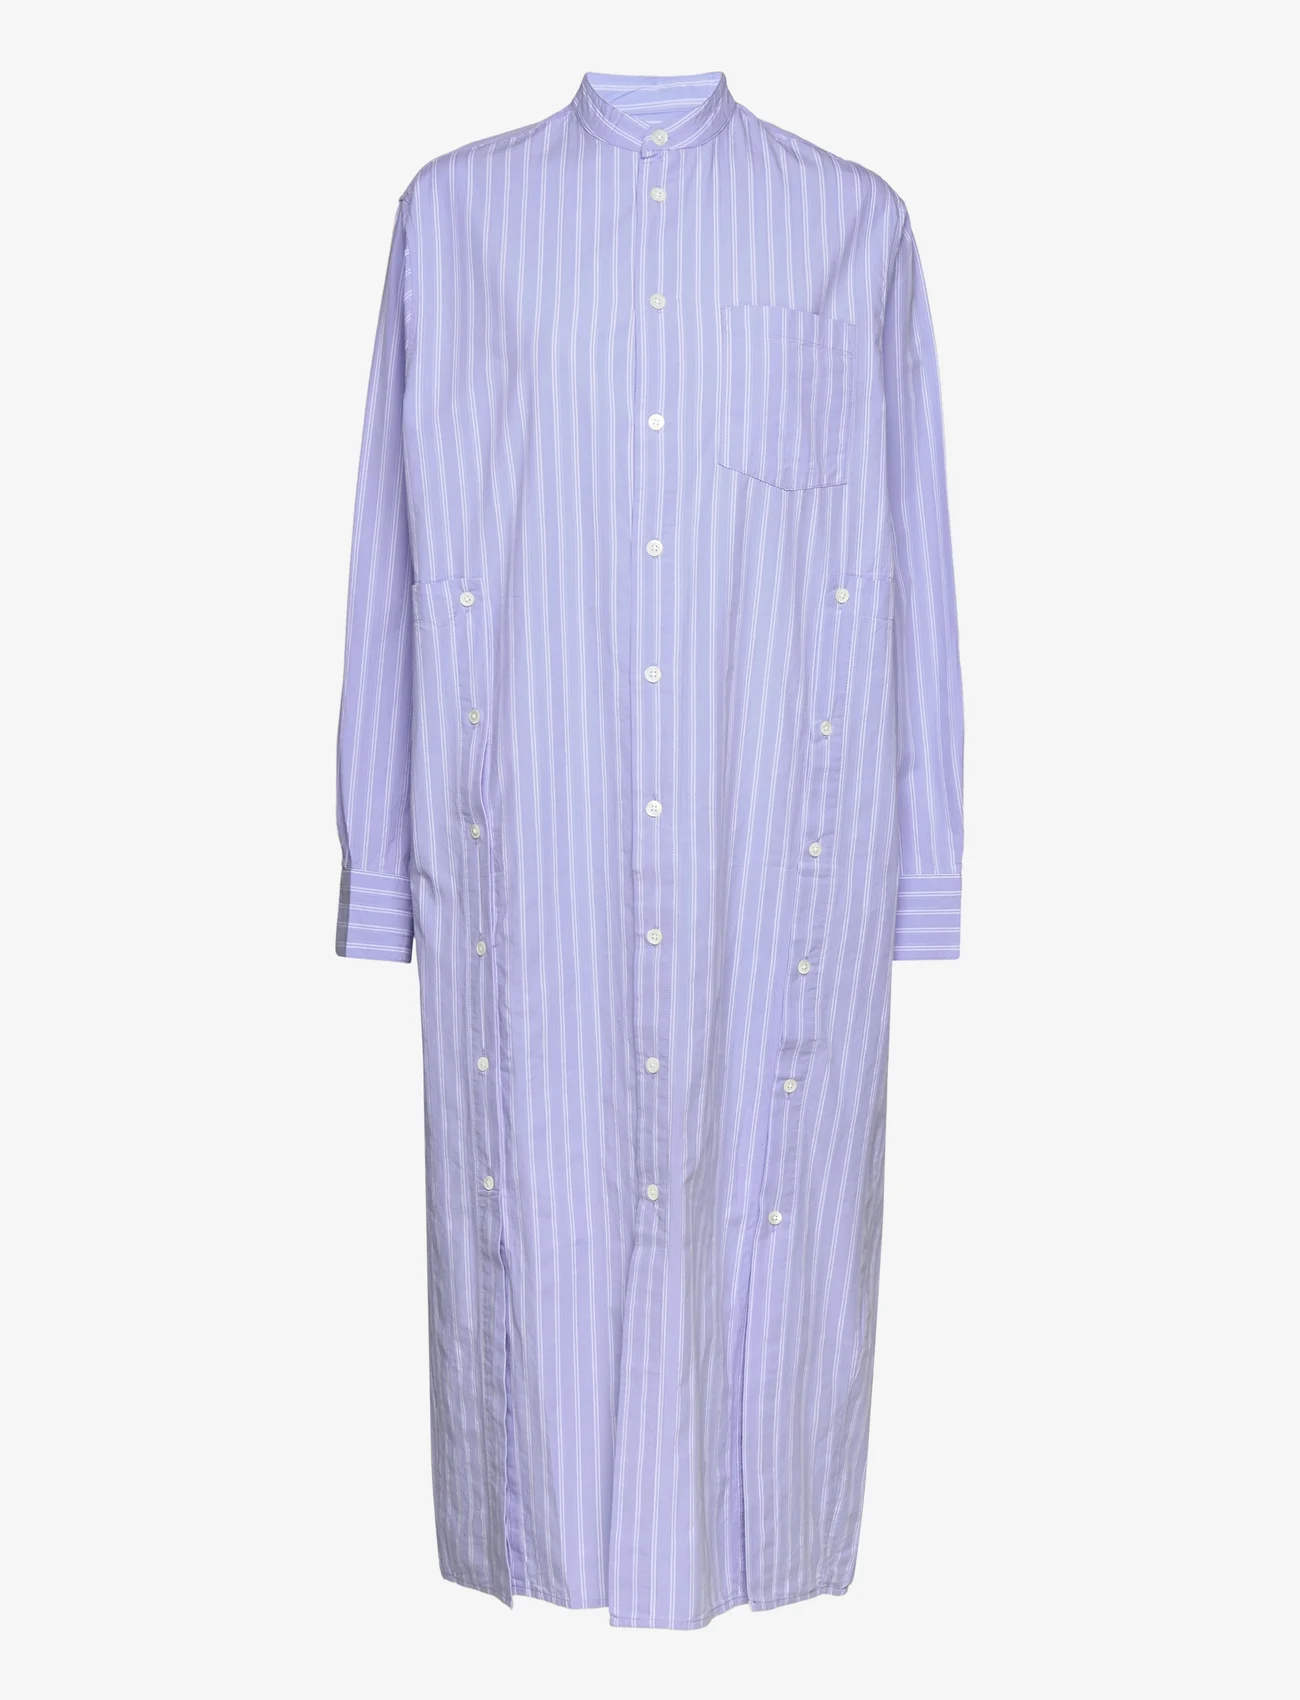 Wood Wood - Soya poplin stripe dress - kreklkleitas - light blue - 0